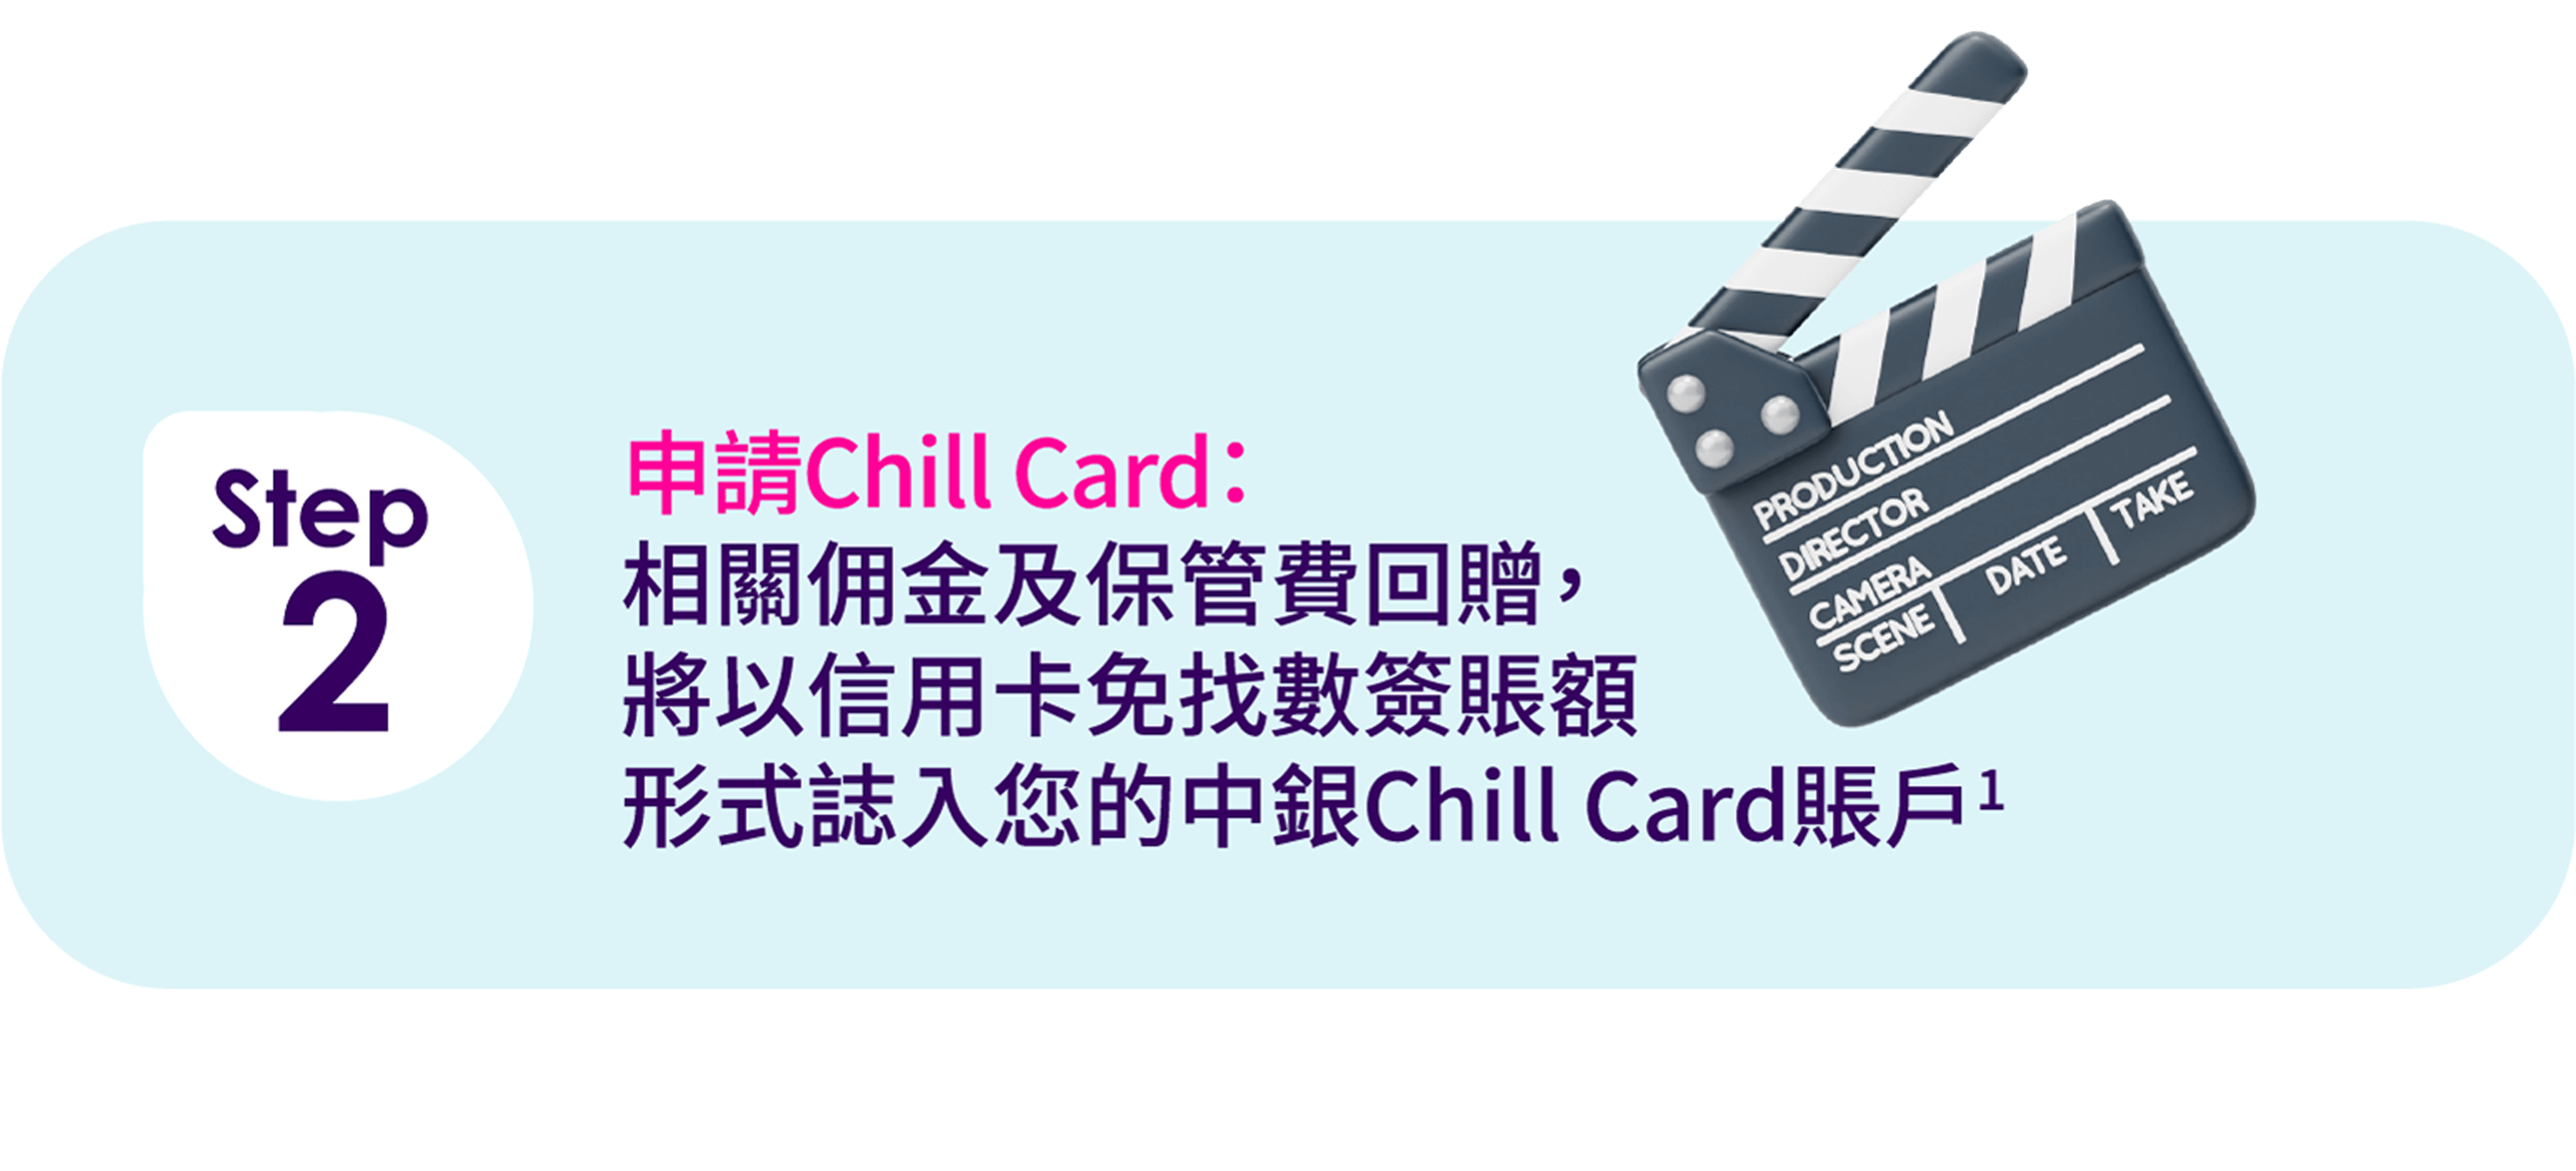 Step 2) 申請Chill Card：相關佣金及保管費回贈，將以信用卡免找數簽賬額形式誌入您的中銀Chill Card賬戶1